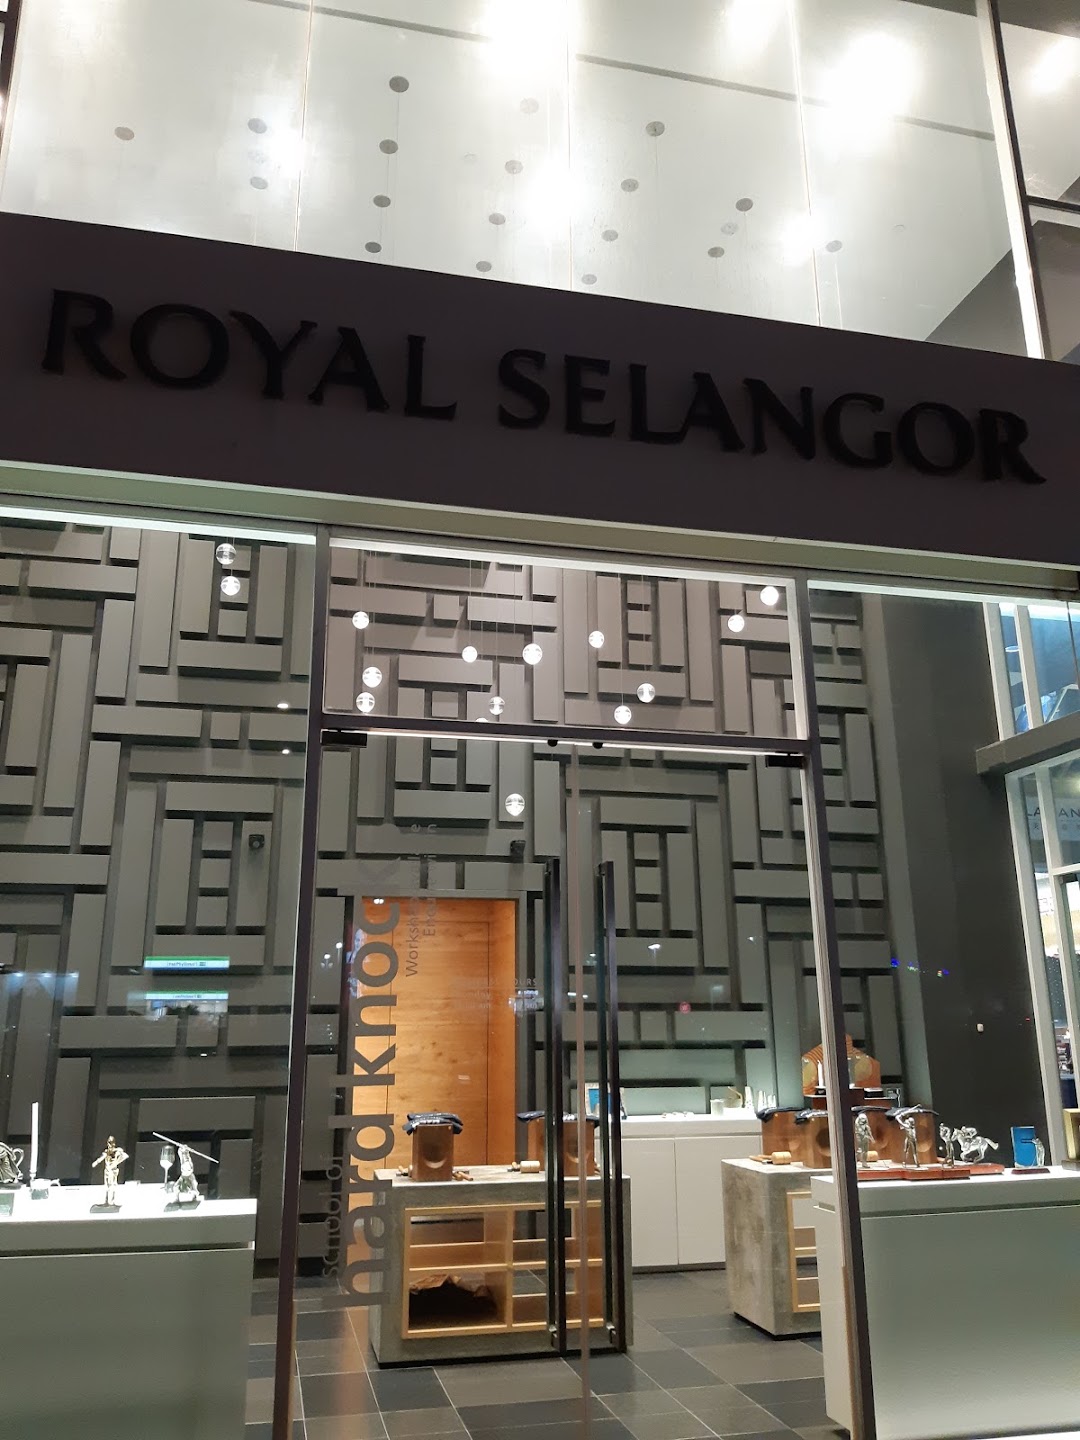 Royal Selangor Dataran Pahlawan